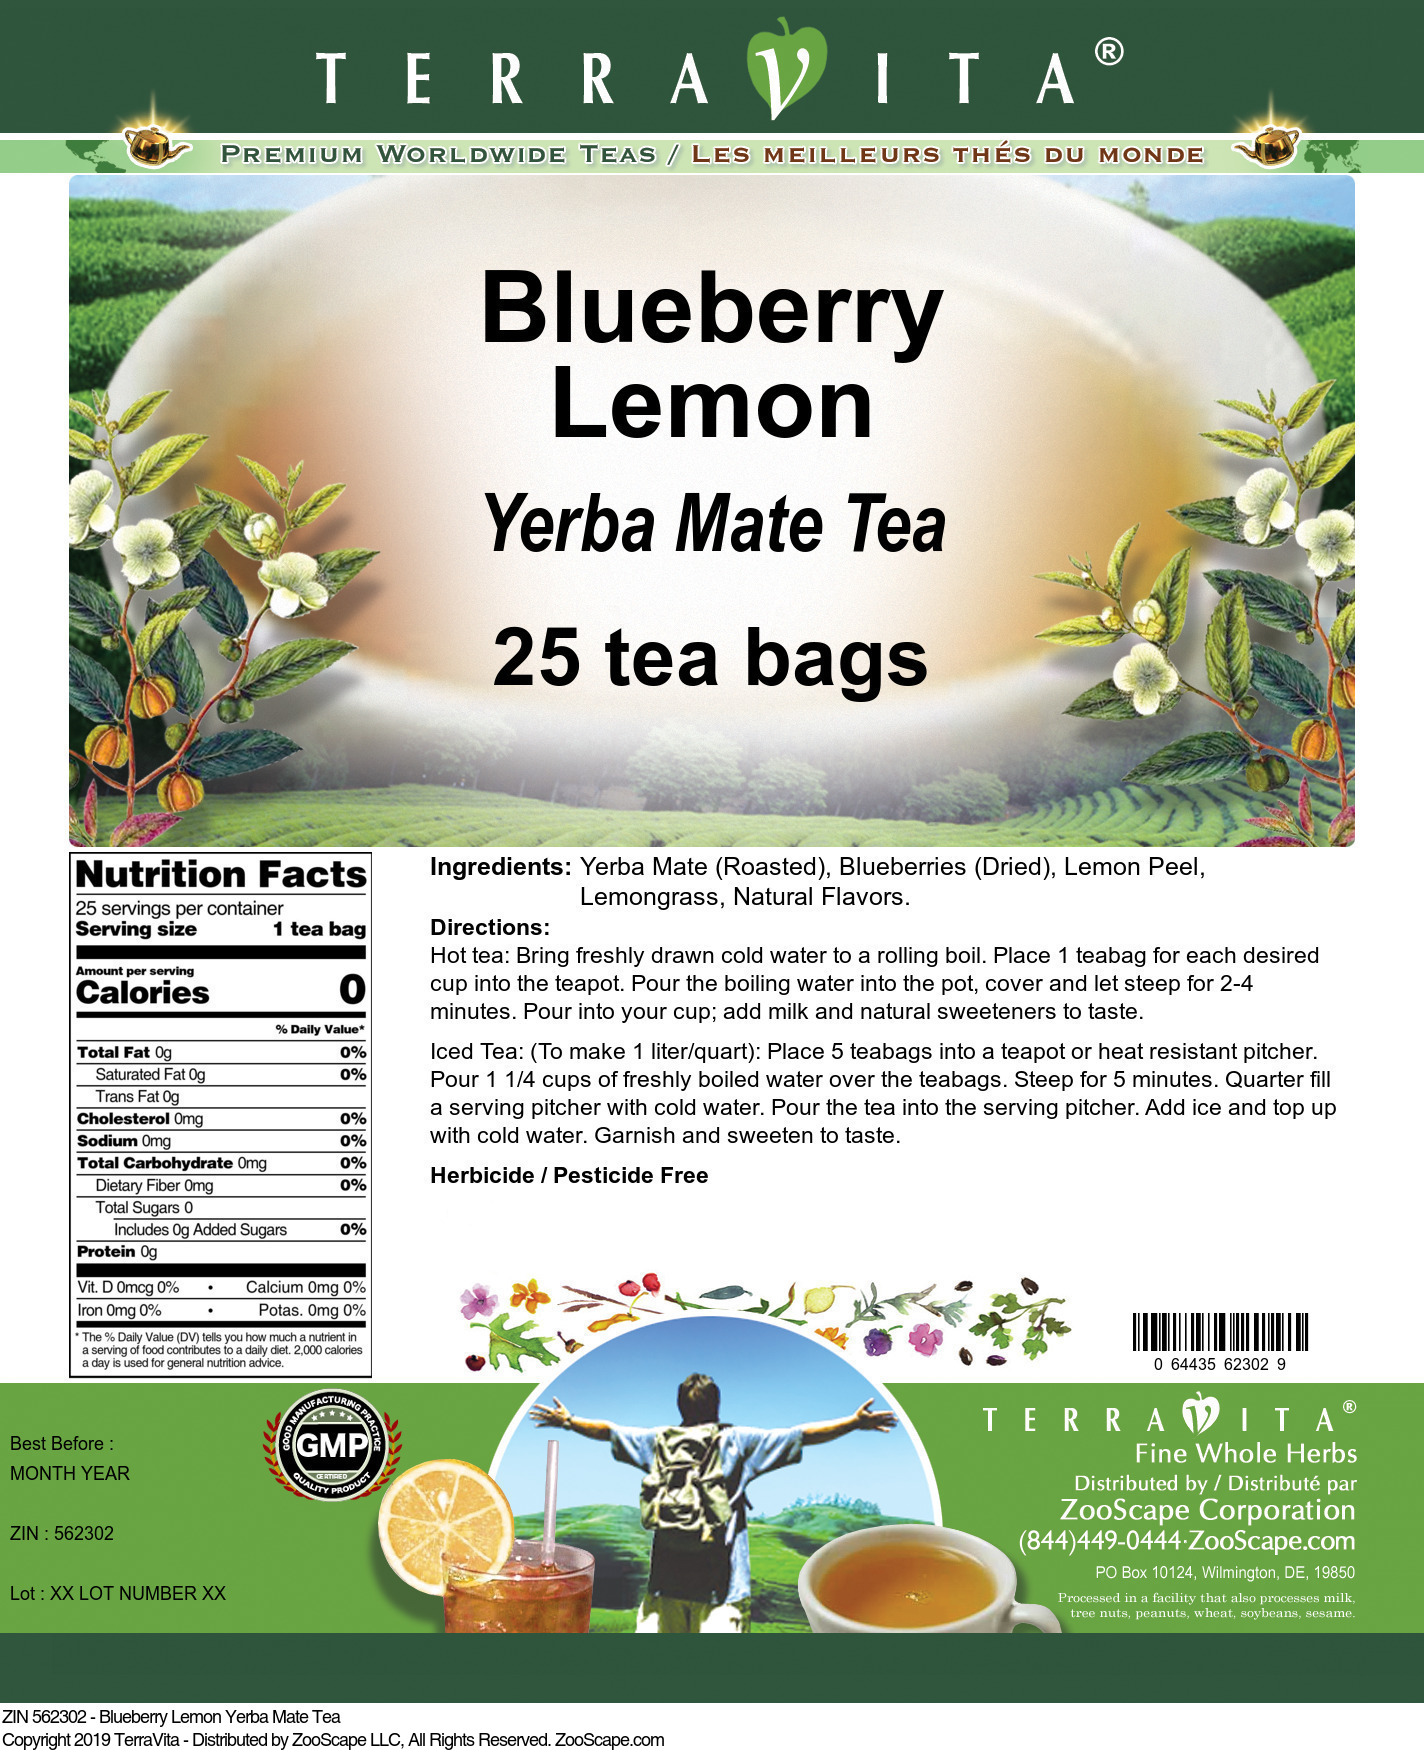 Blueberry Lemon Yerba Mate Tea - Label